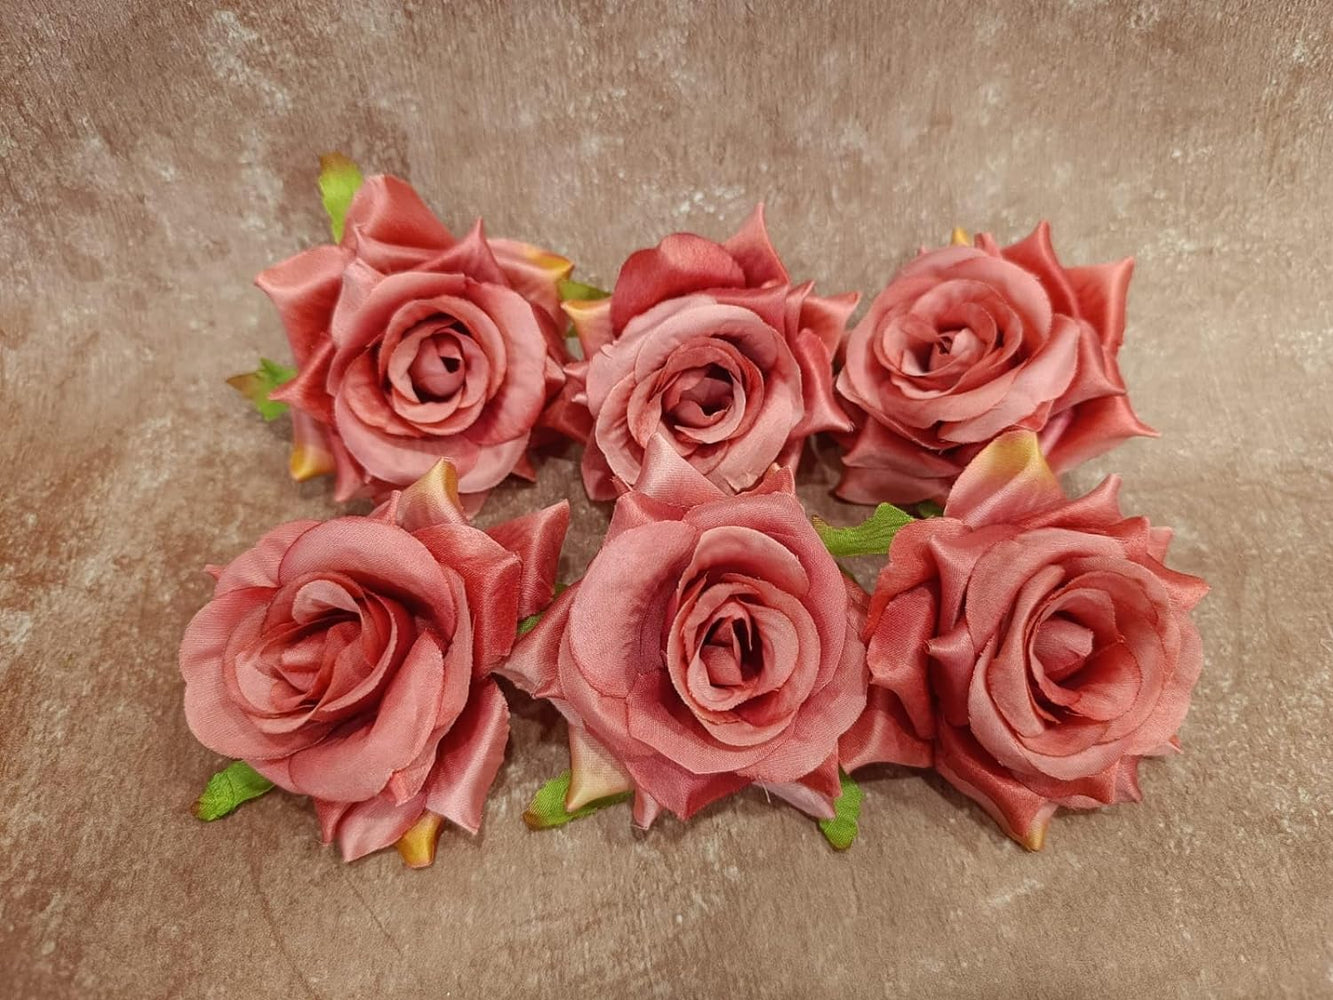 Buy/Send Gorgeous Floral Gift Online | FloraIndia